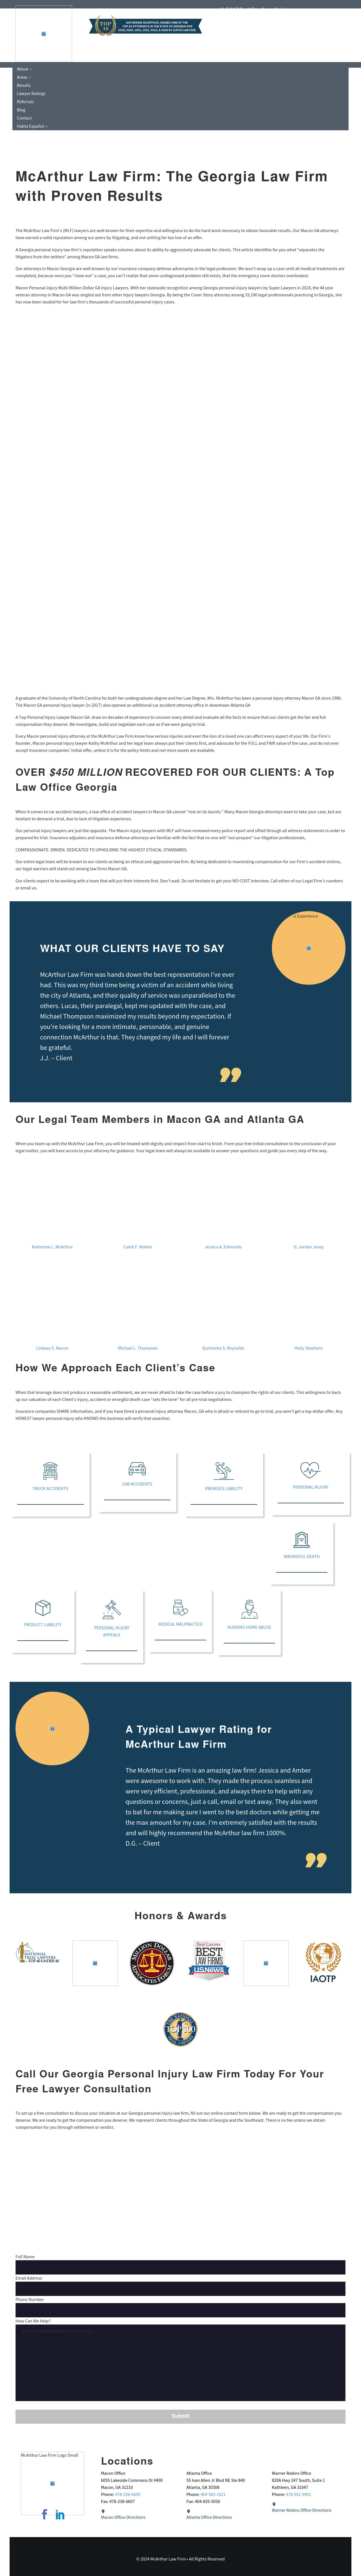 McArthur Law Firm - Macon GA Lawyers